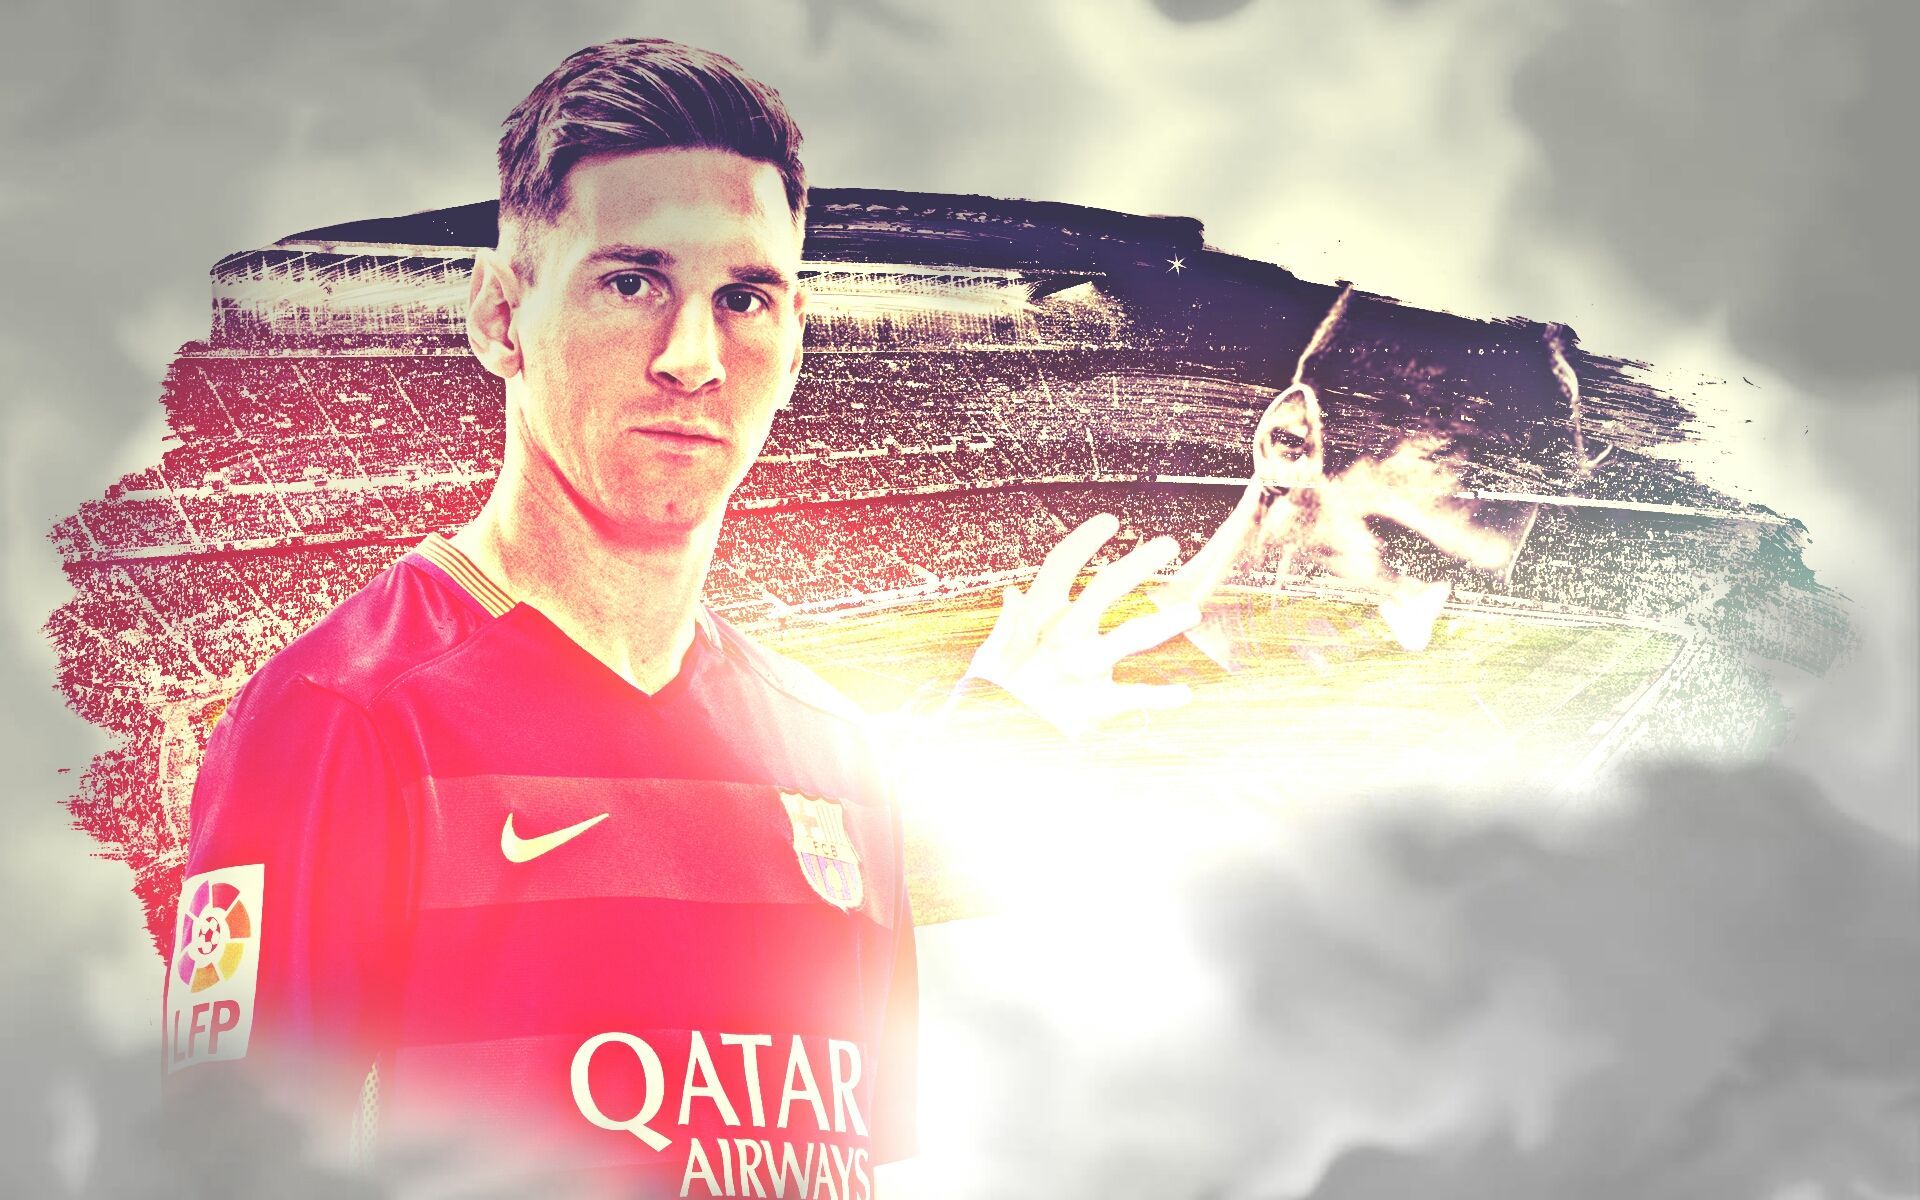 Messi Desktop Background | Wallpapers, Backgrounds, Images, Art ...